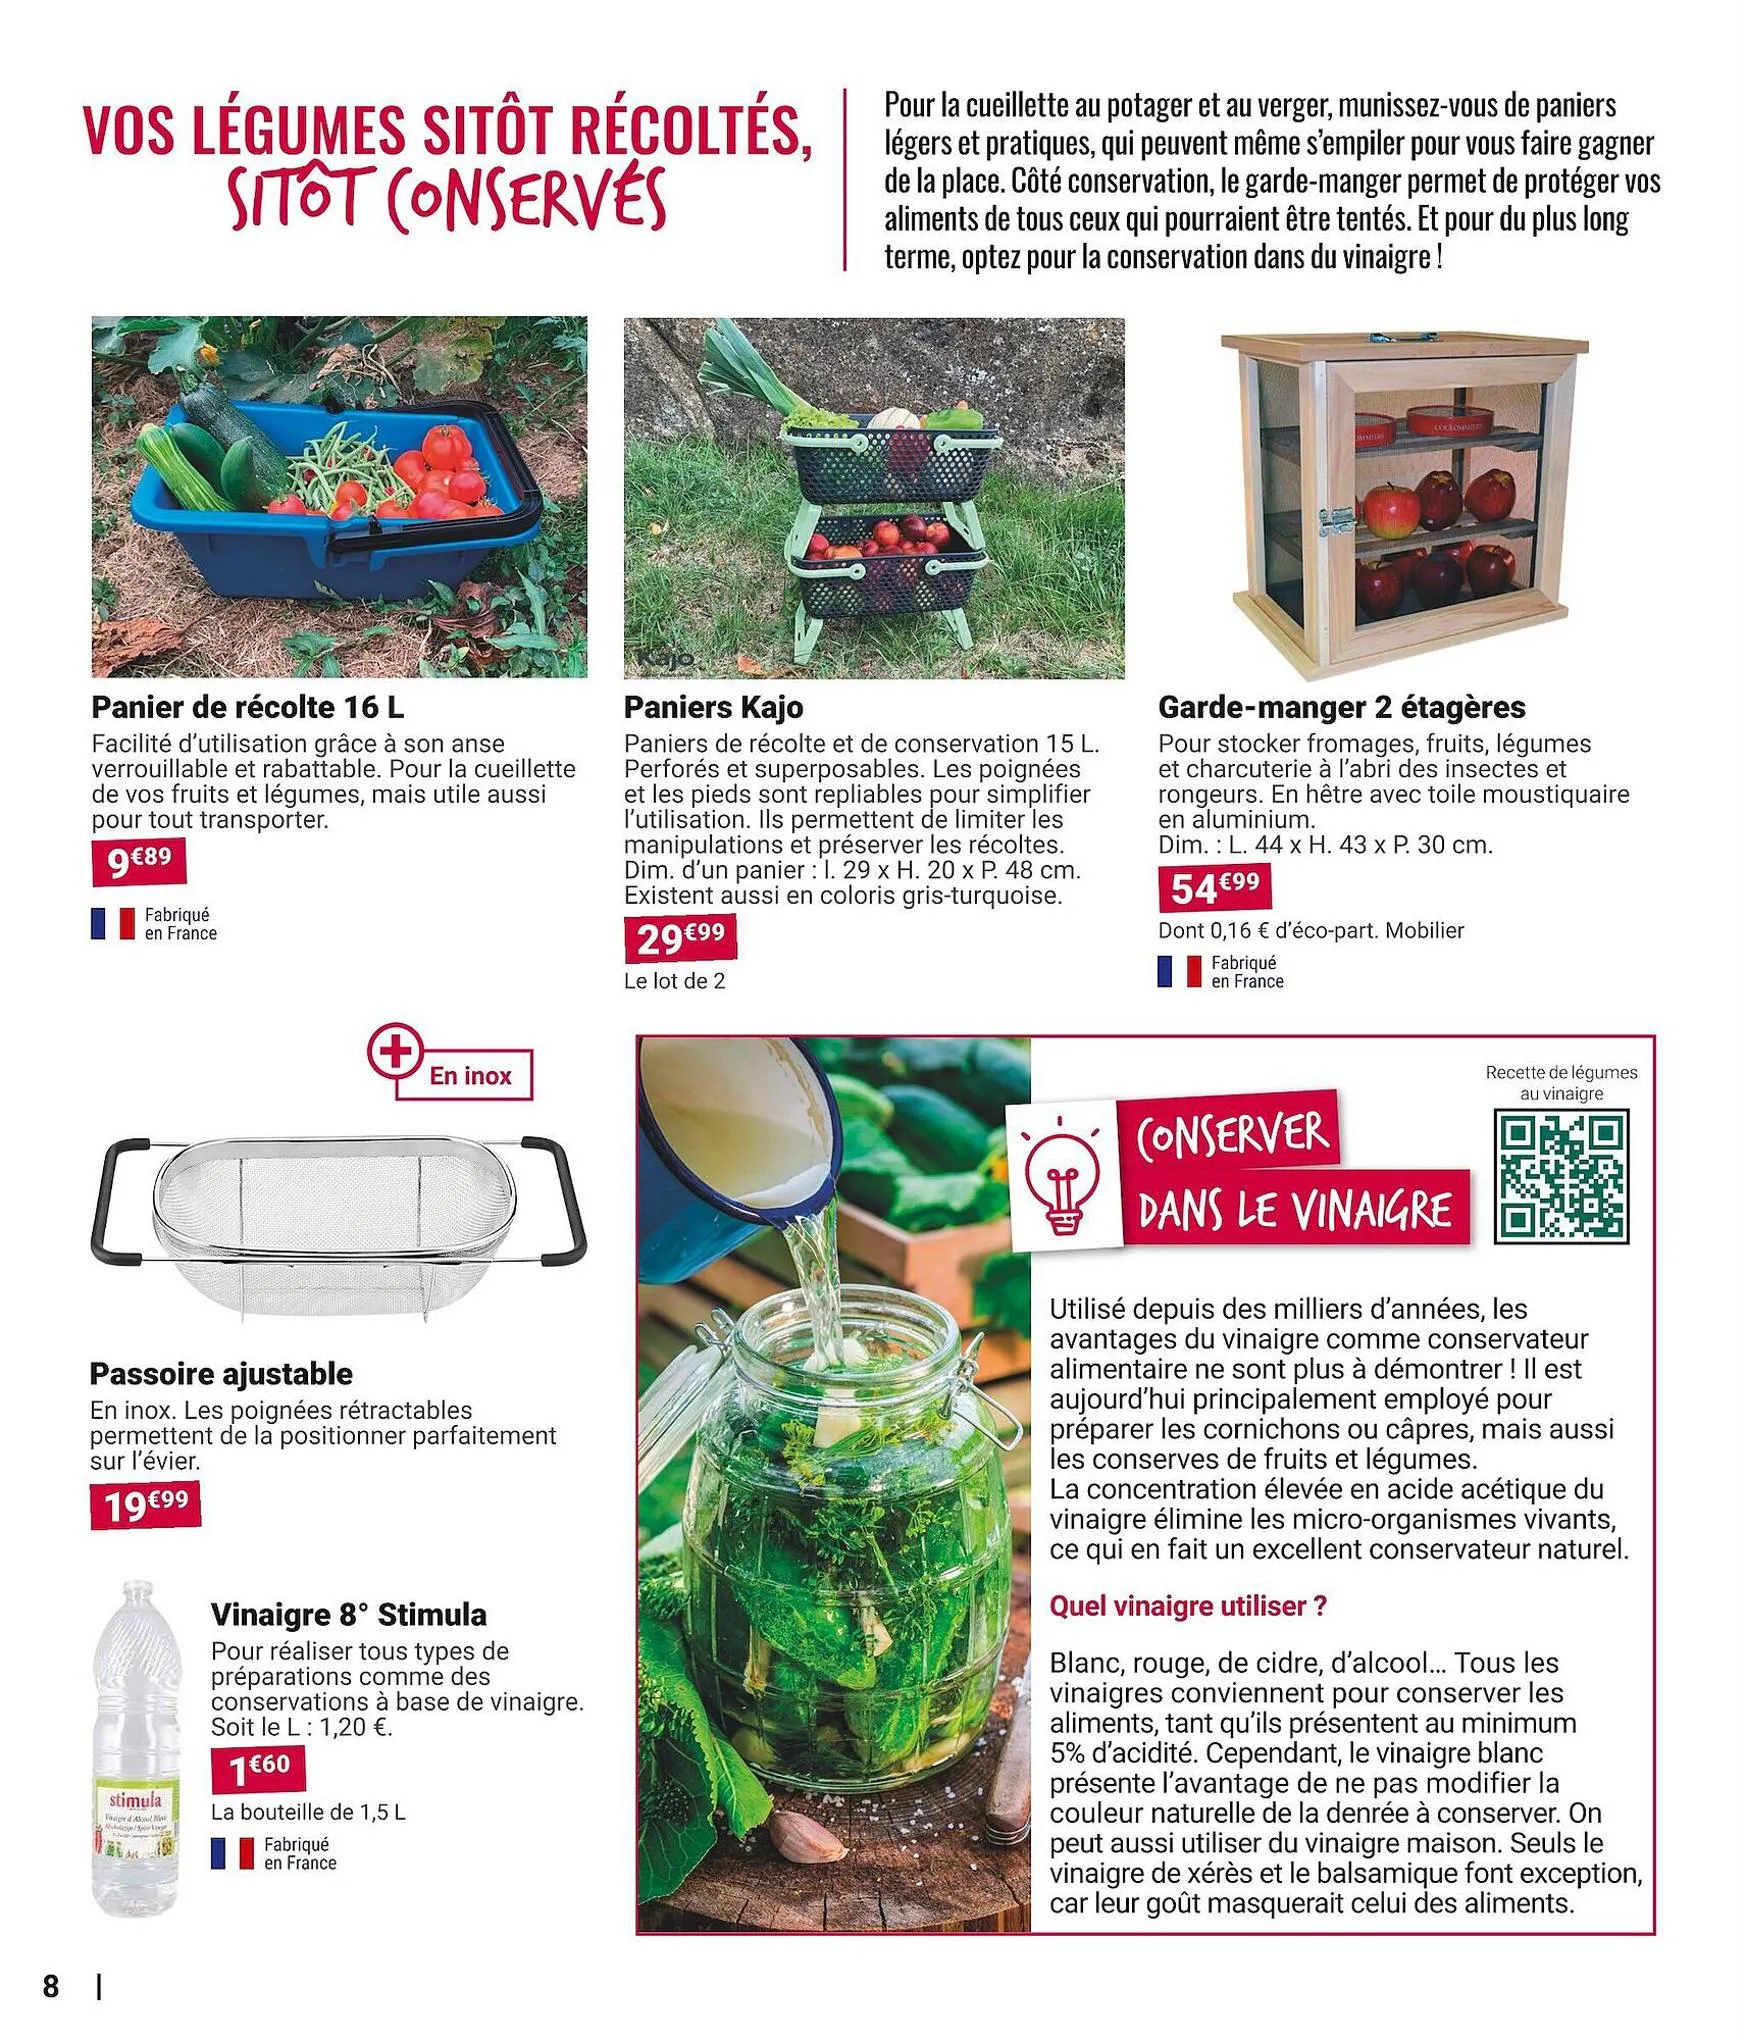 Catalogue Catalogue Gamm vert, page 00008